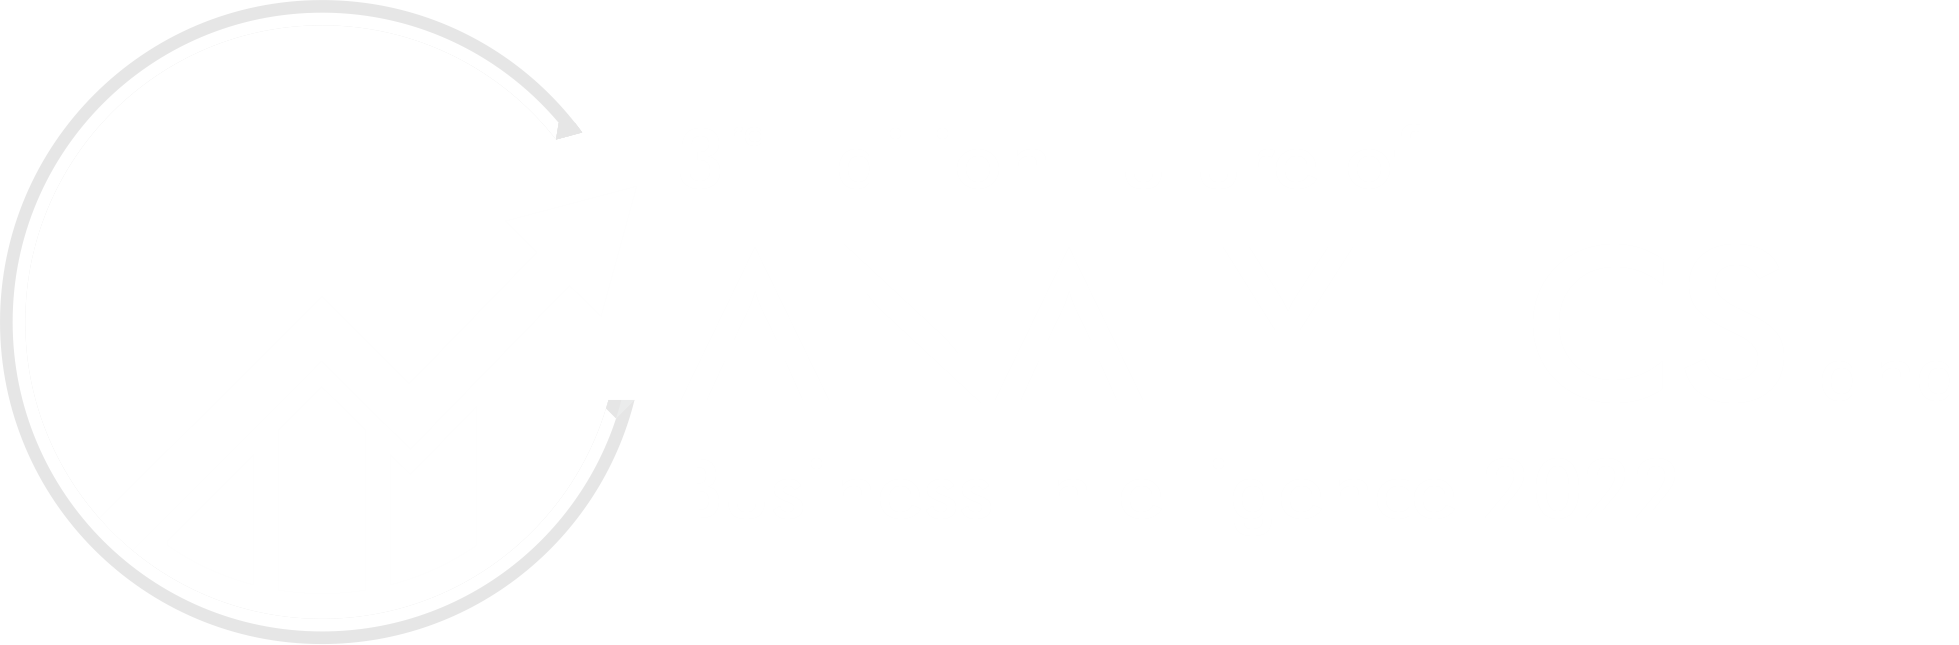 3rd Future Of Analytics & BI Virtual Summit 2022